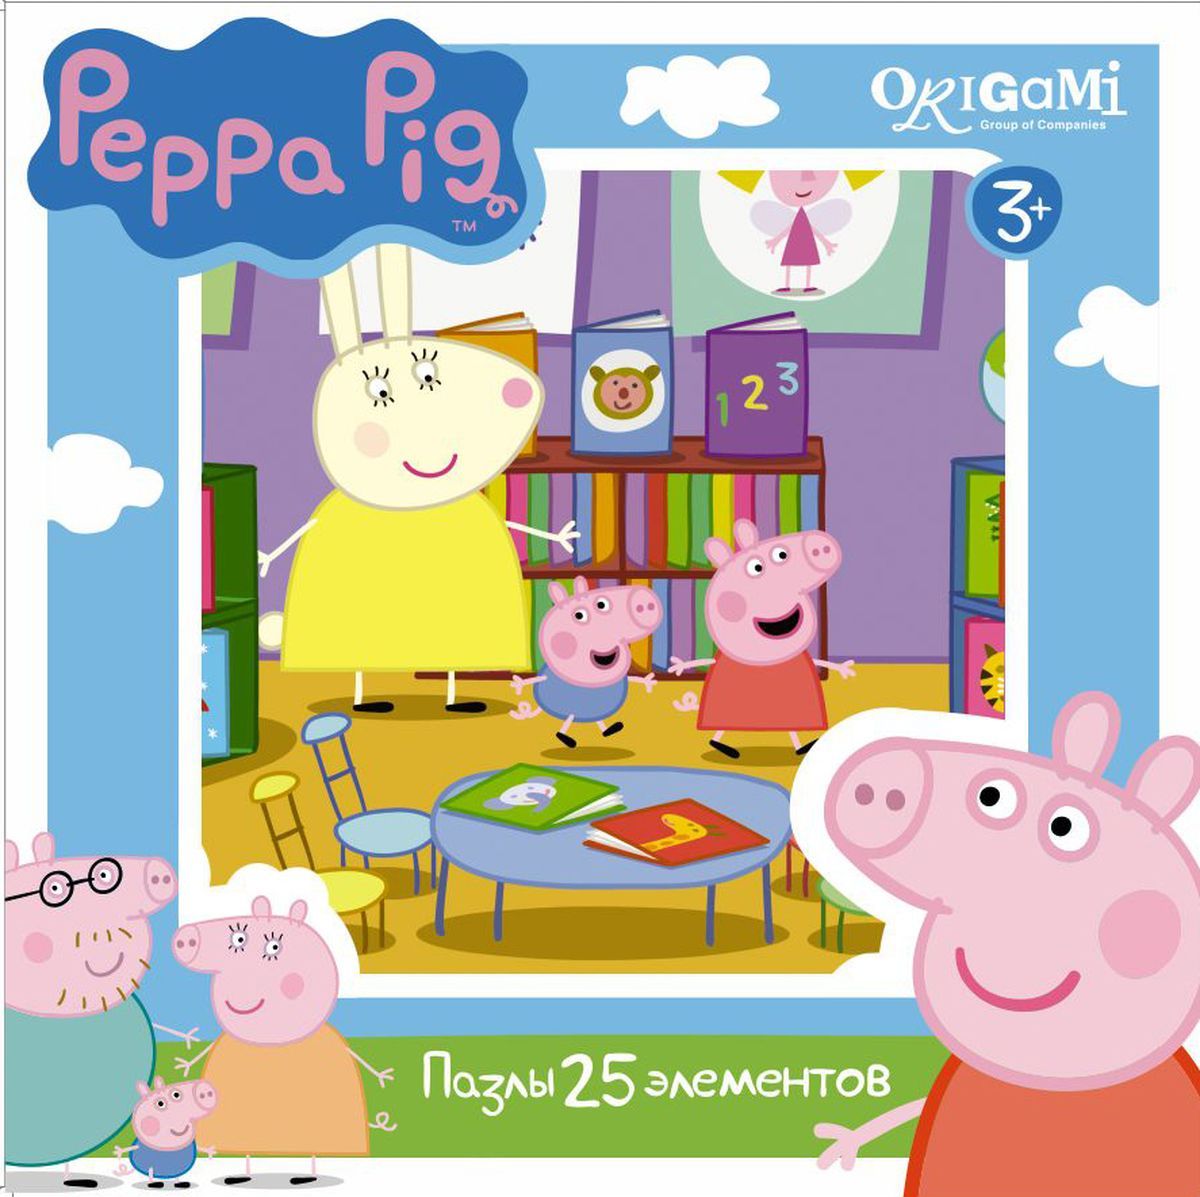     Peppa Pig 01583